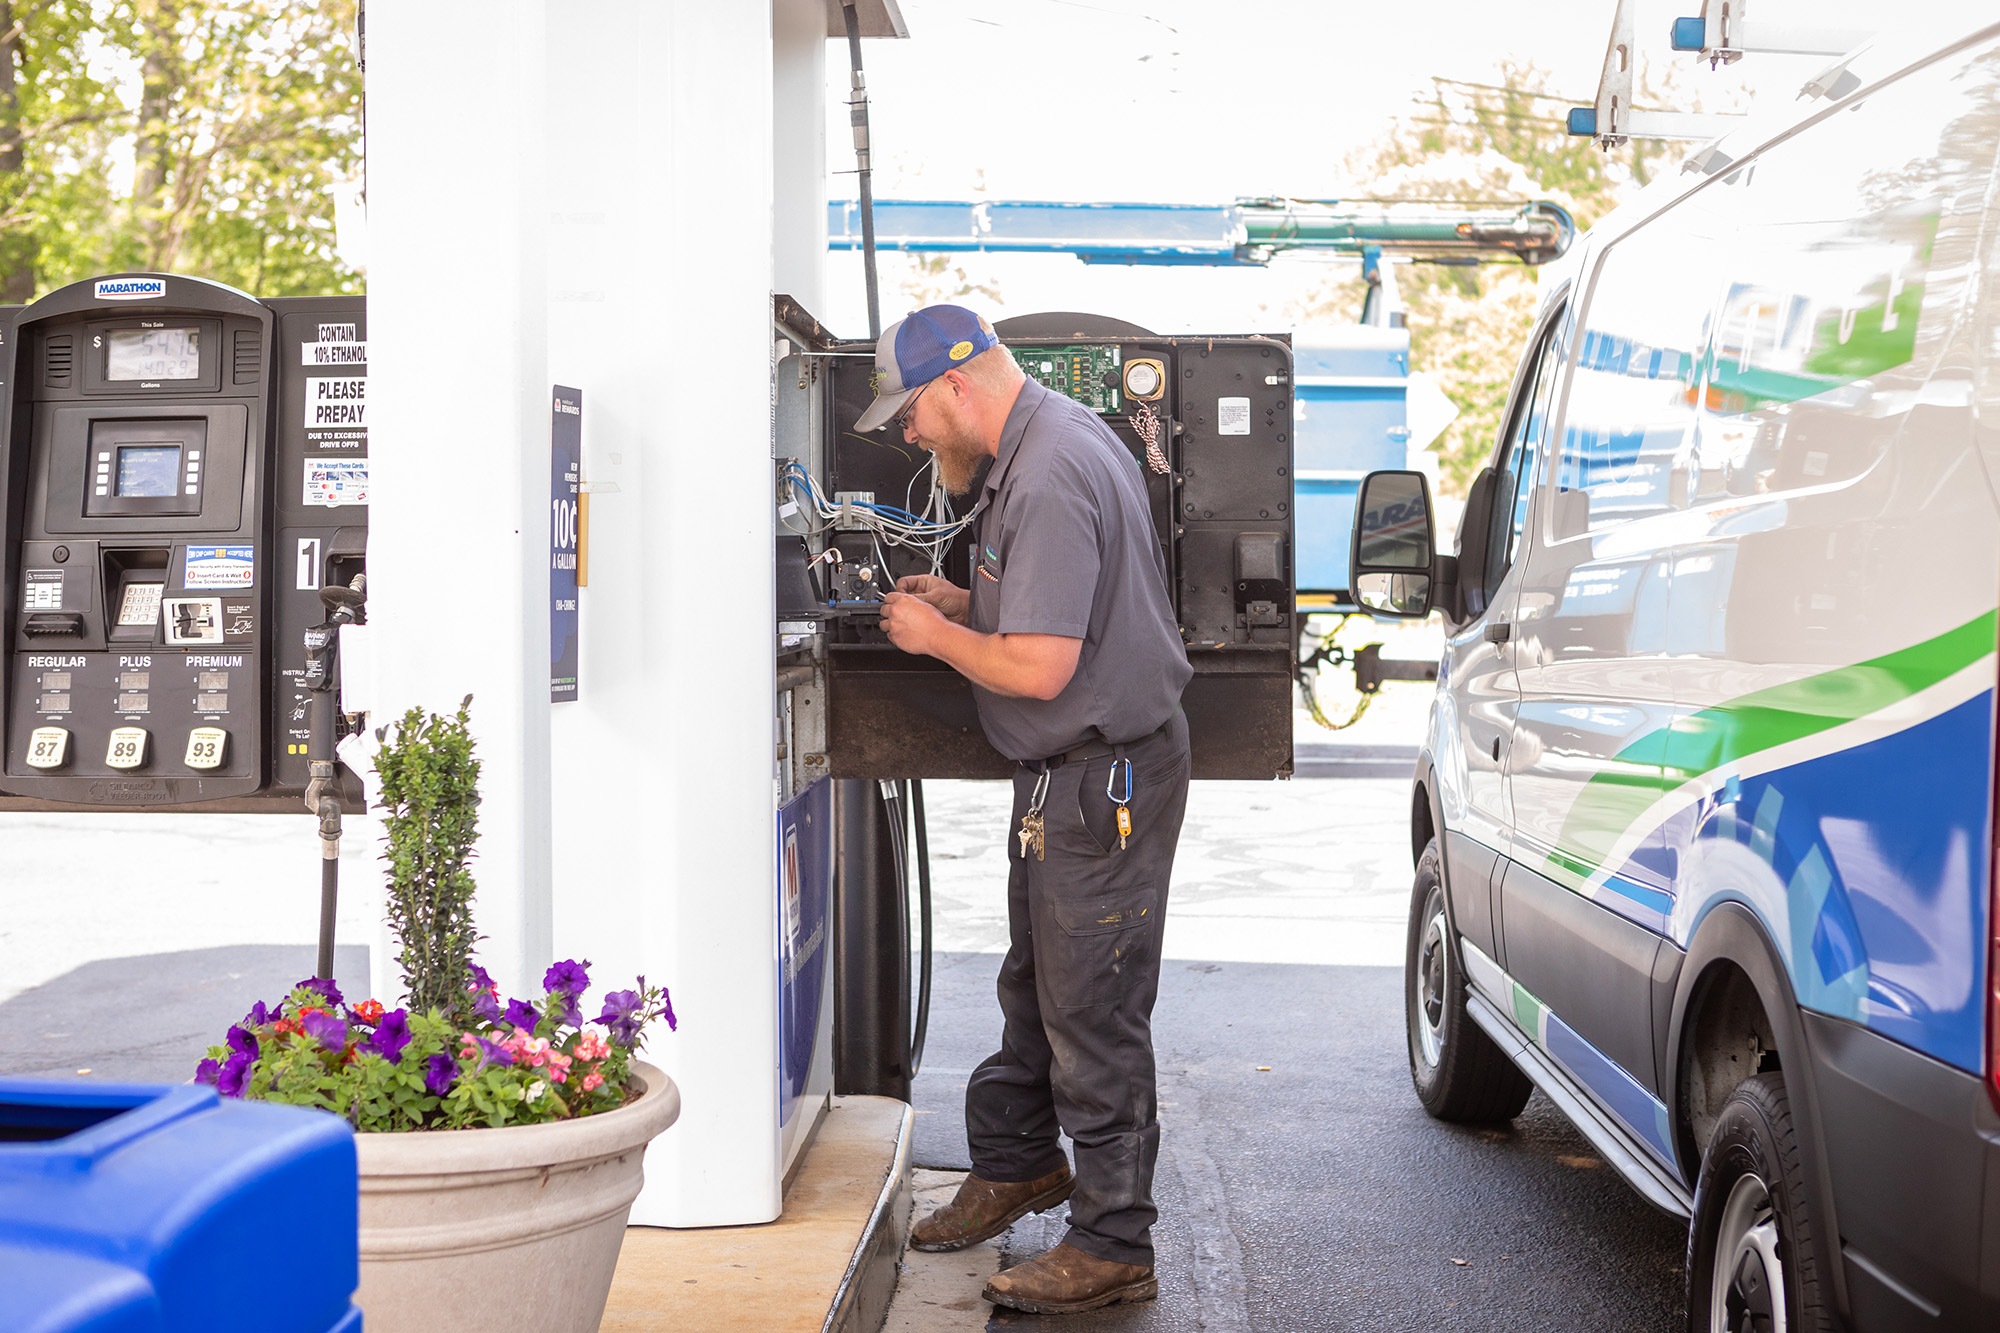 Gasoline, Diesel & Kerosene technician at a gas station pump.